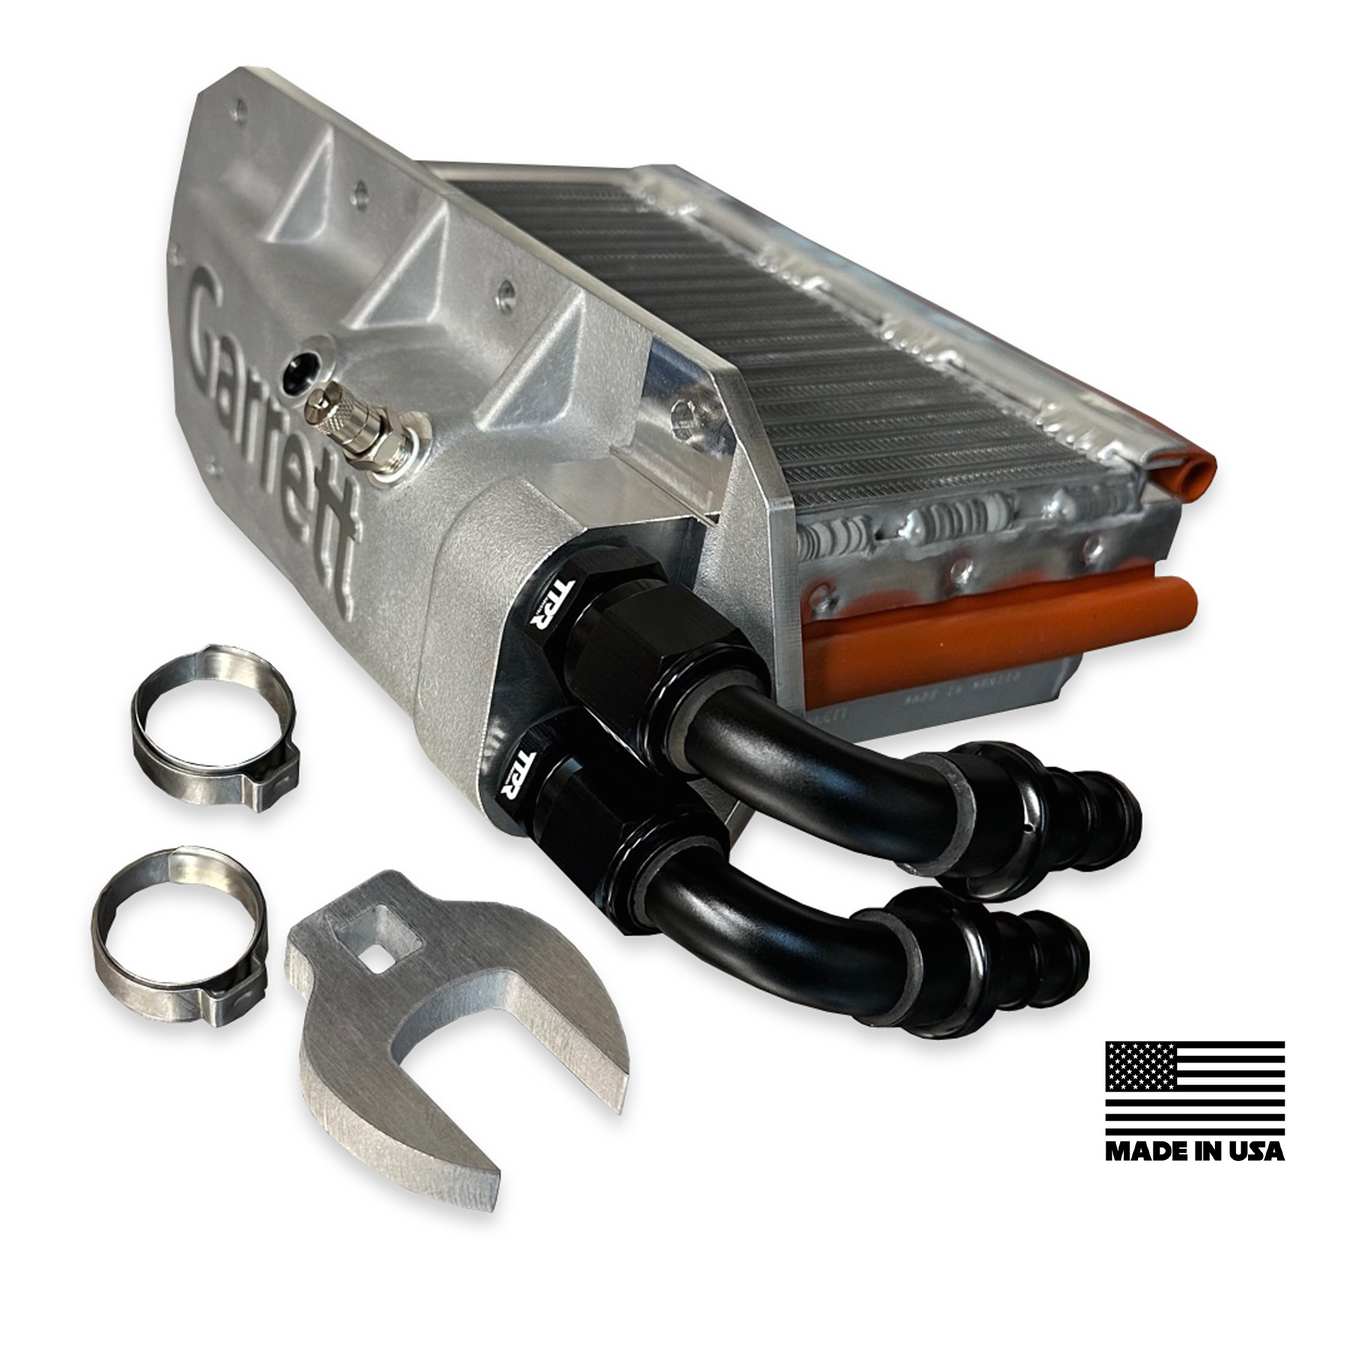 Polaris RZR Engine Packages, Parts & Accessories